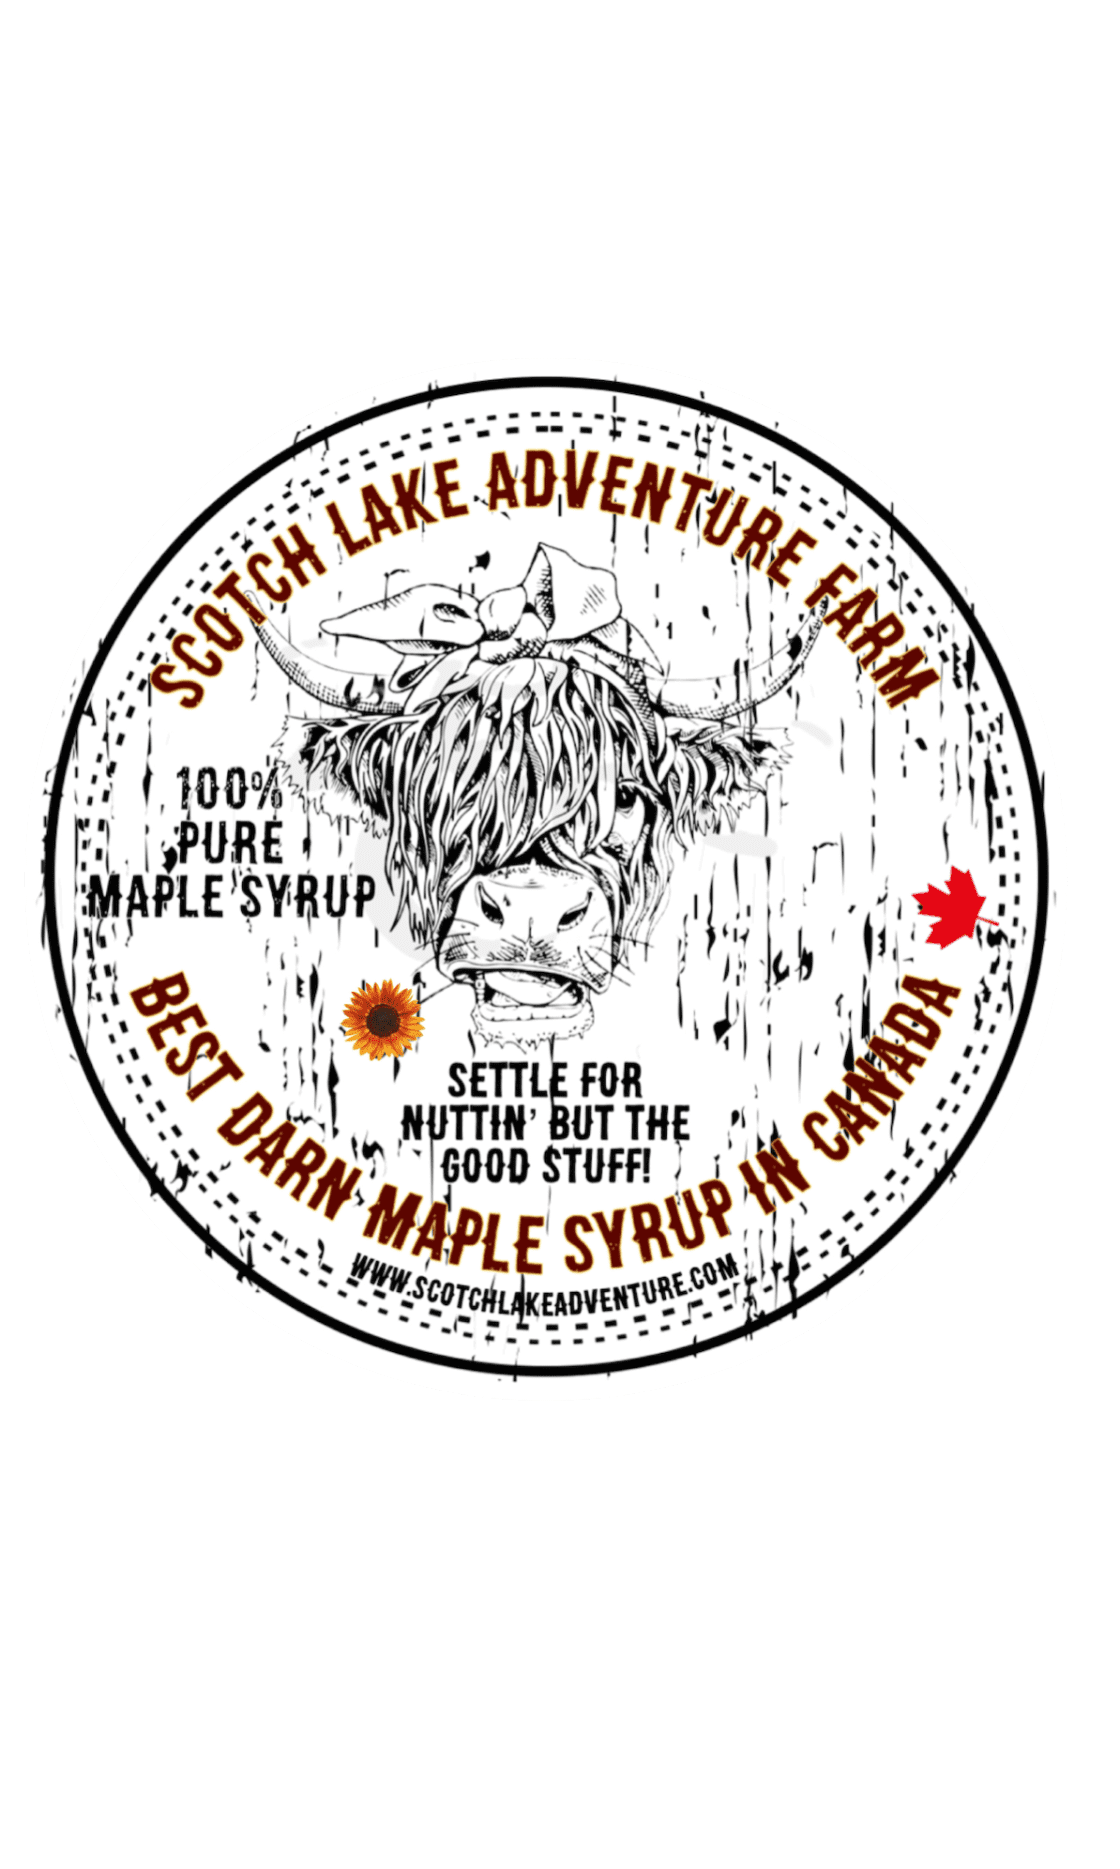 Scotch Lake Adventure